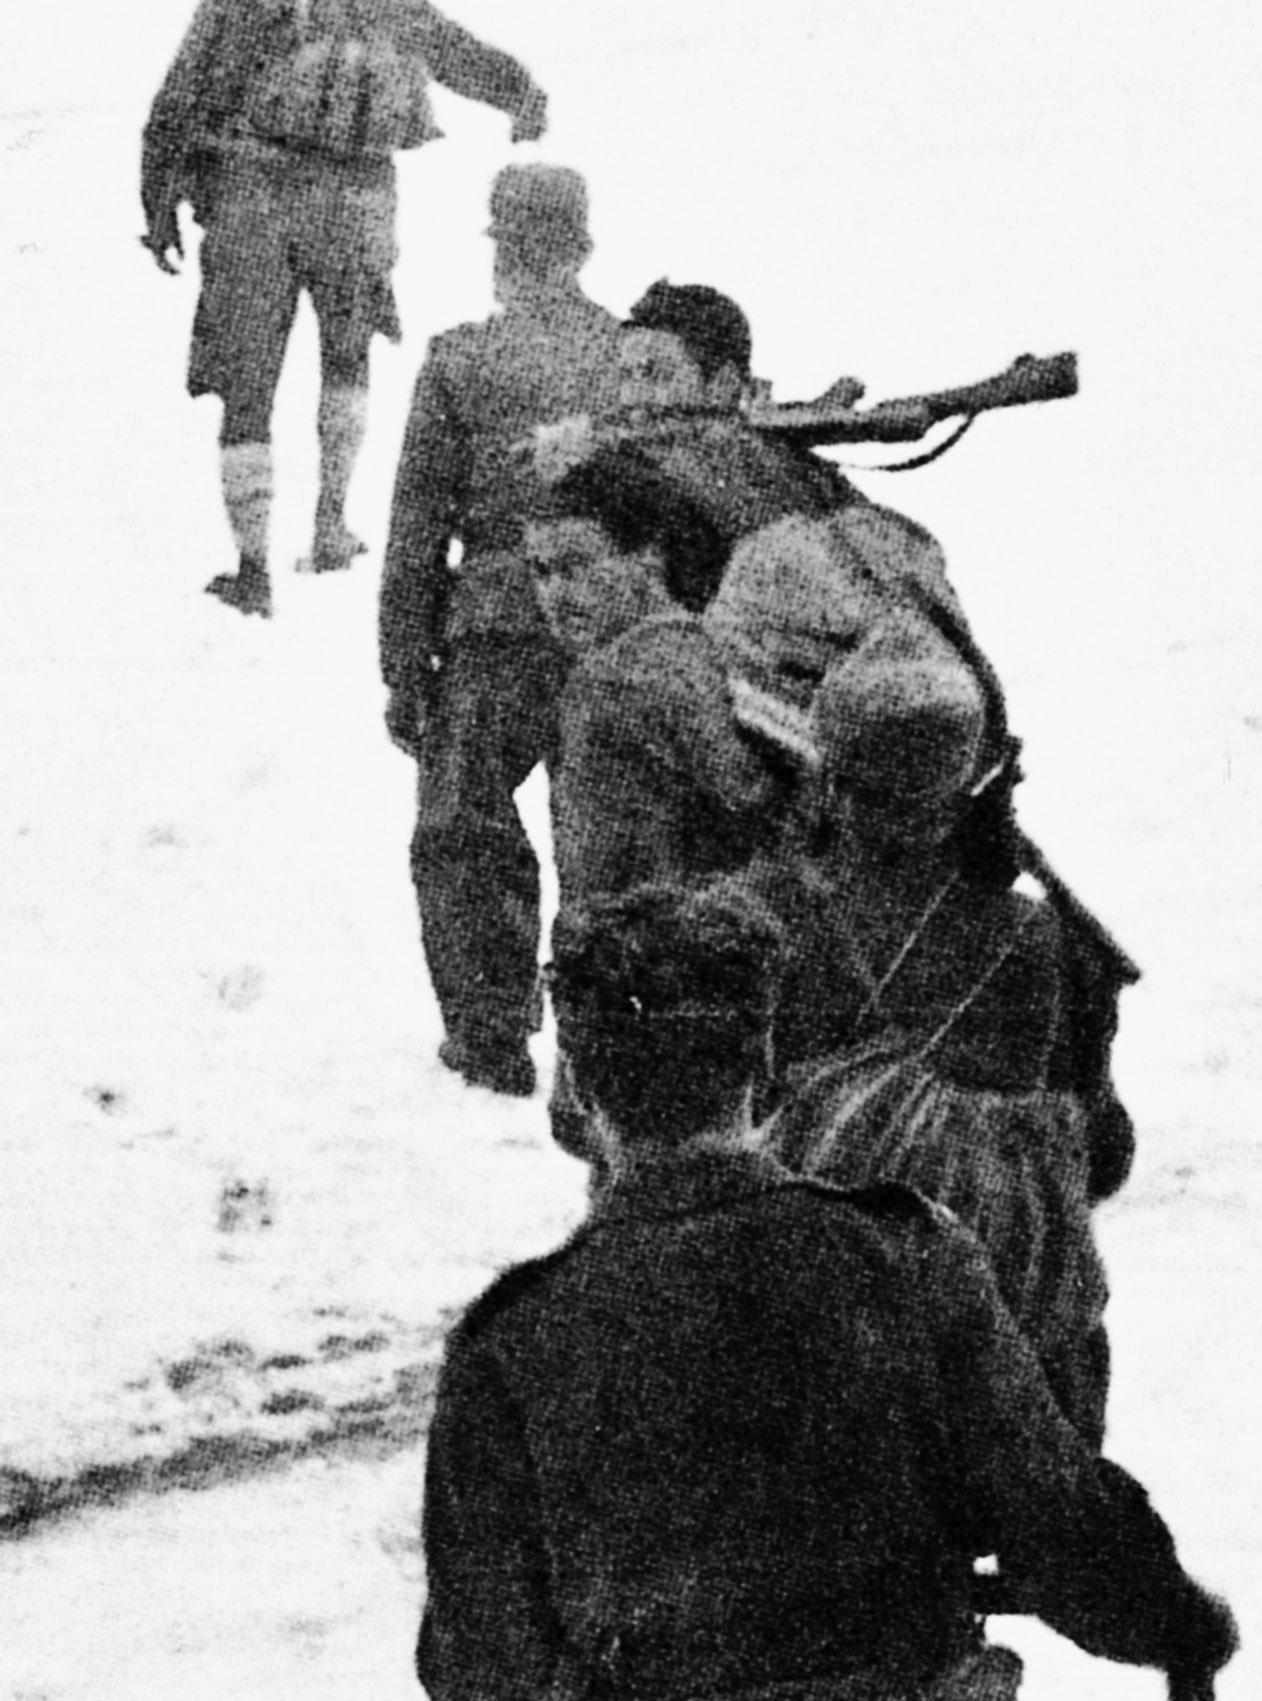 Eordaialive.com - Τα Νέα της Πτολεμαΐδας, Εορδαίας, Κοζάνης 78 χρόνια από την εντυπωσιακή απαγωγή του Γερμανού στρατηγού Κράιπε [εικόνες]